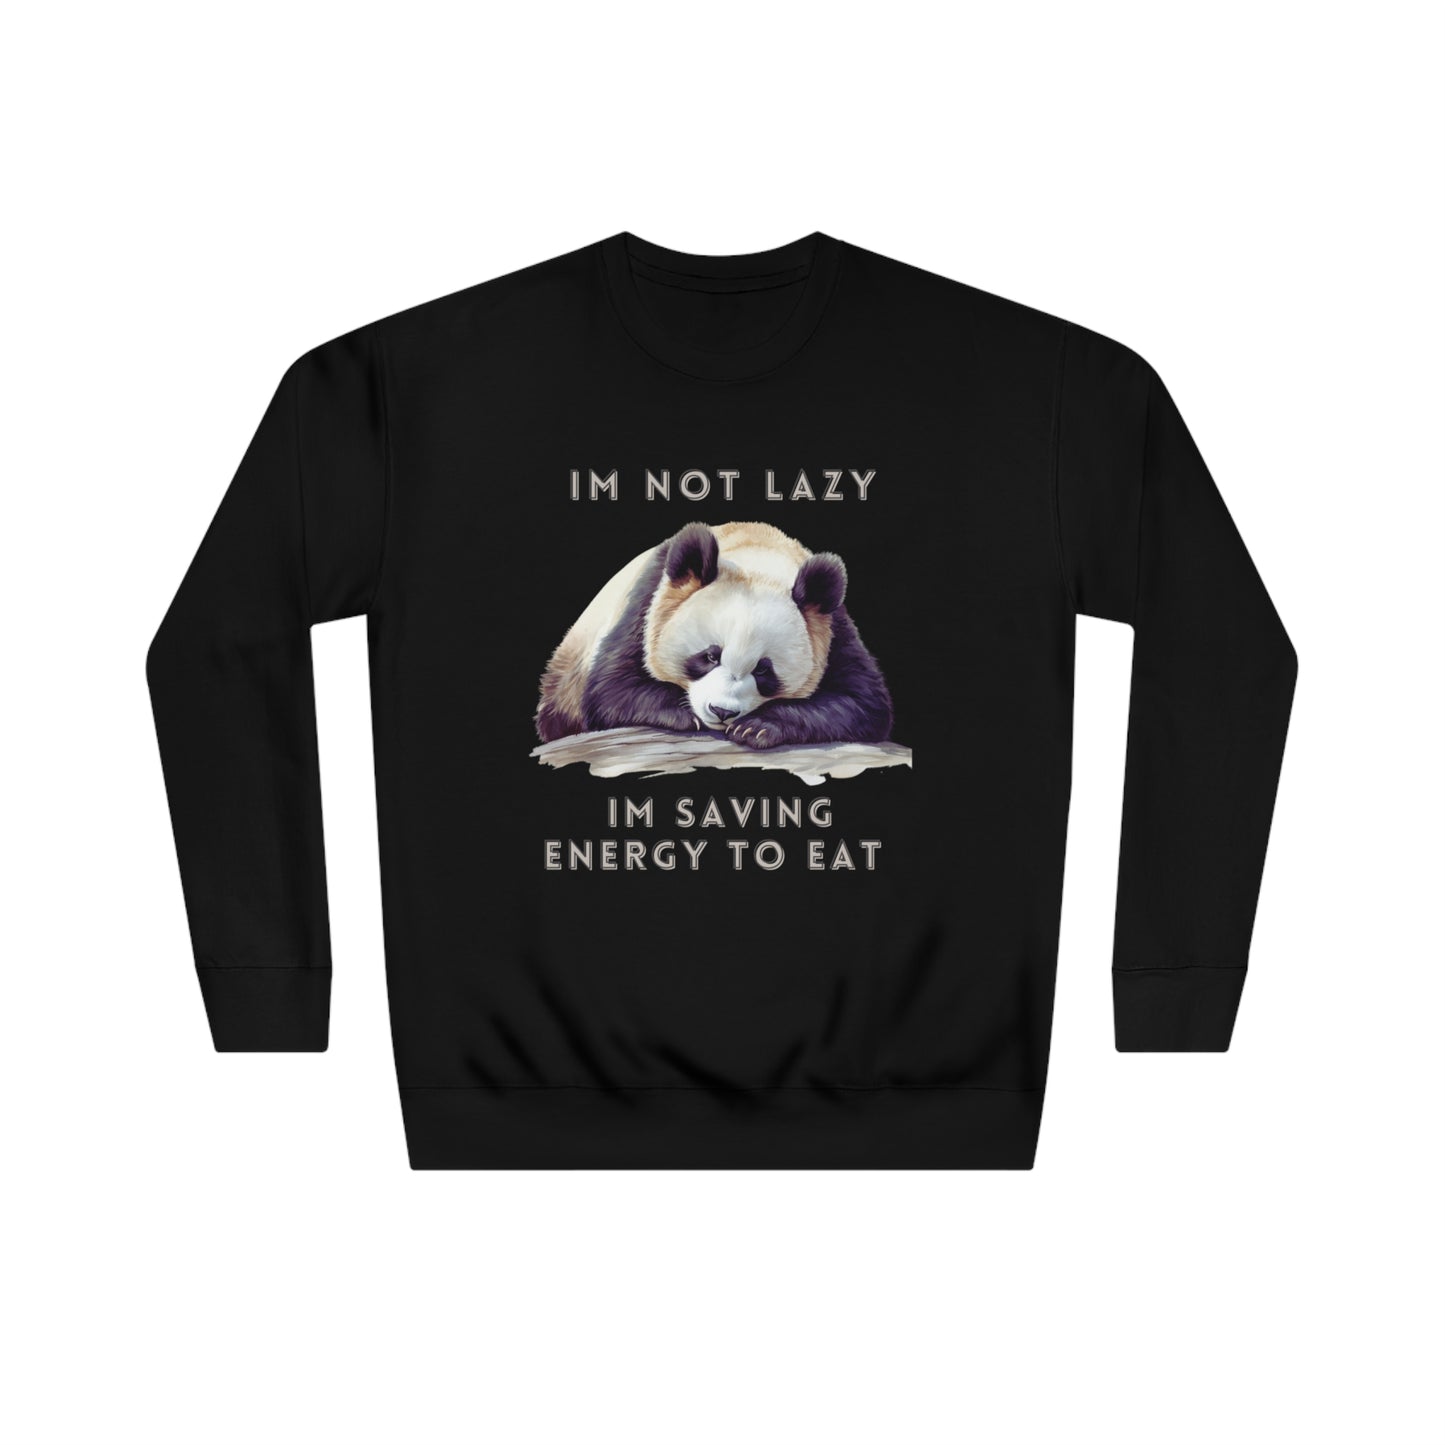 I'm Not Lazy Sweatshirt | Embrace Cozy Relaxation | Funny Panda Sweatshirt | Panda Lover Gift Sweatshirt Black S 